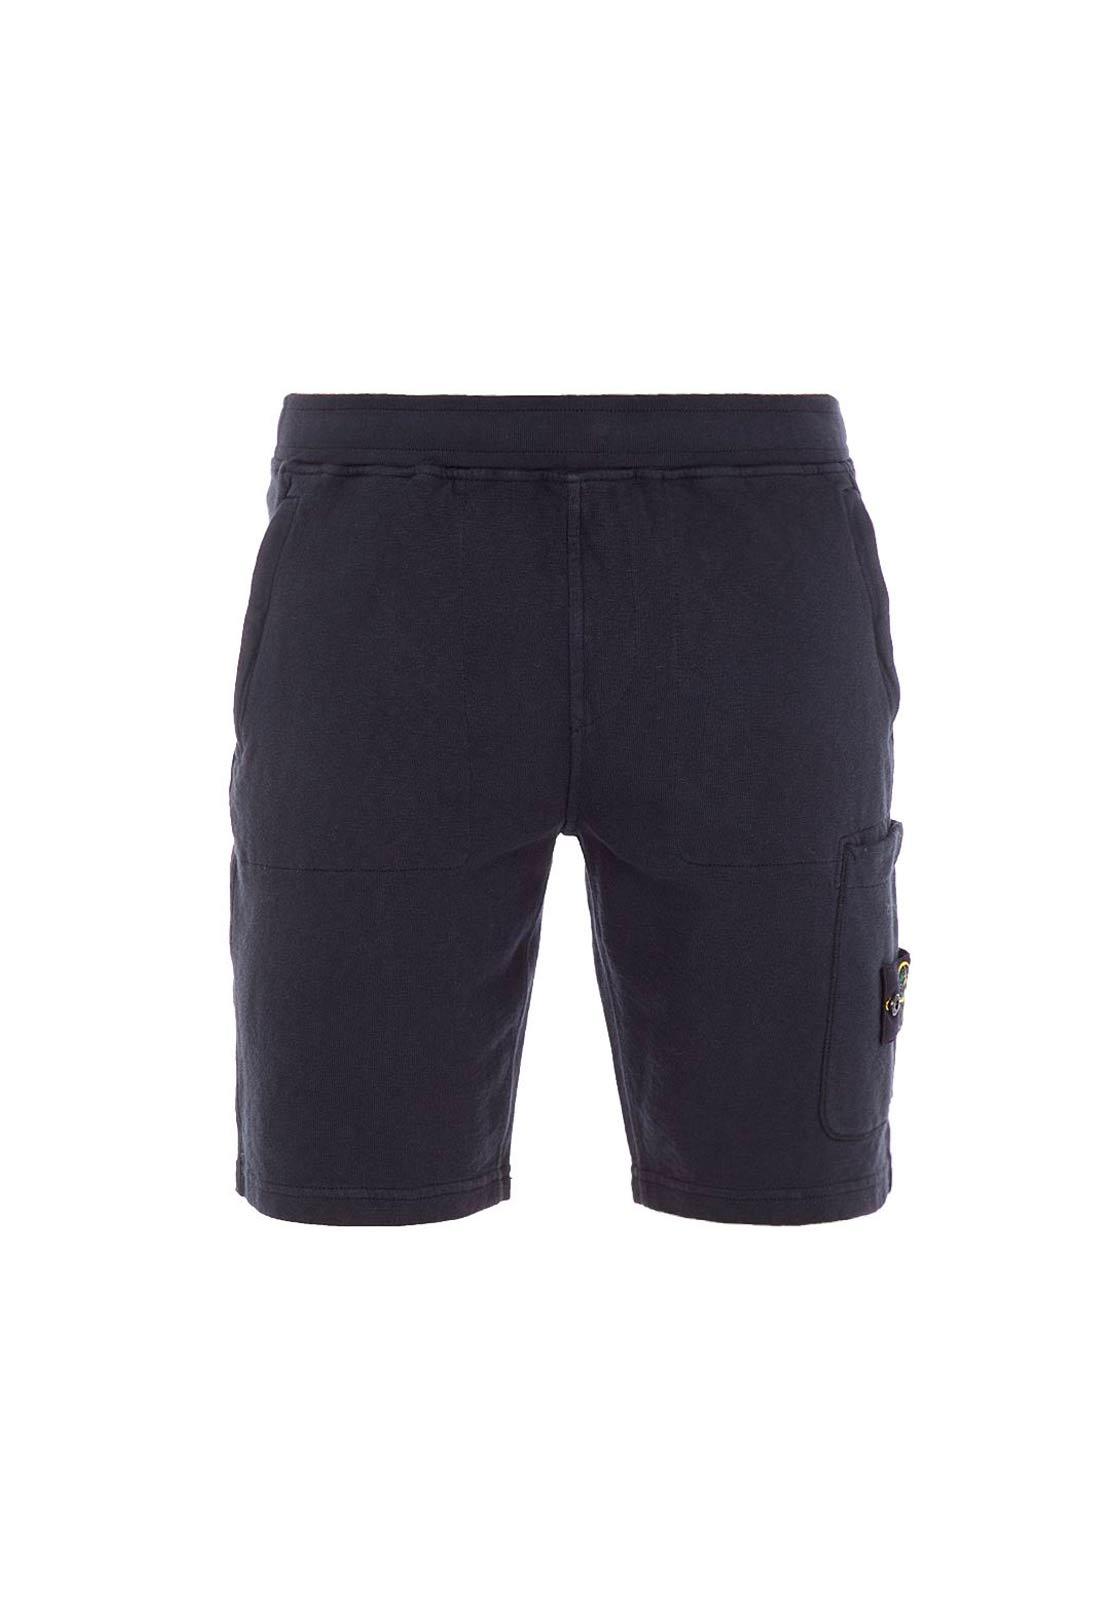 Stone Island Shorts Navy Blue for Men | Lyst